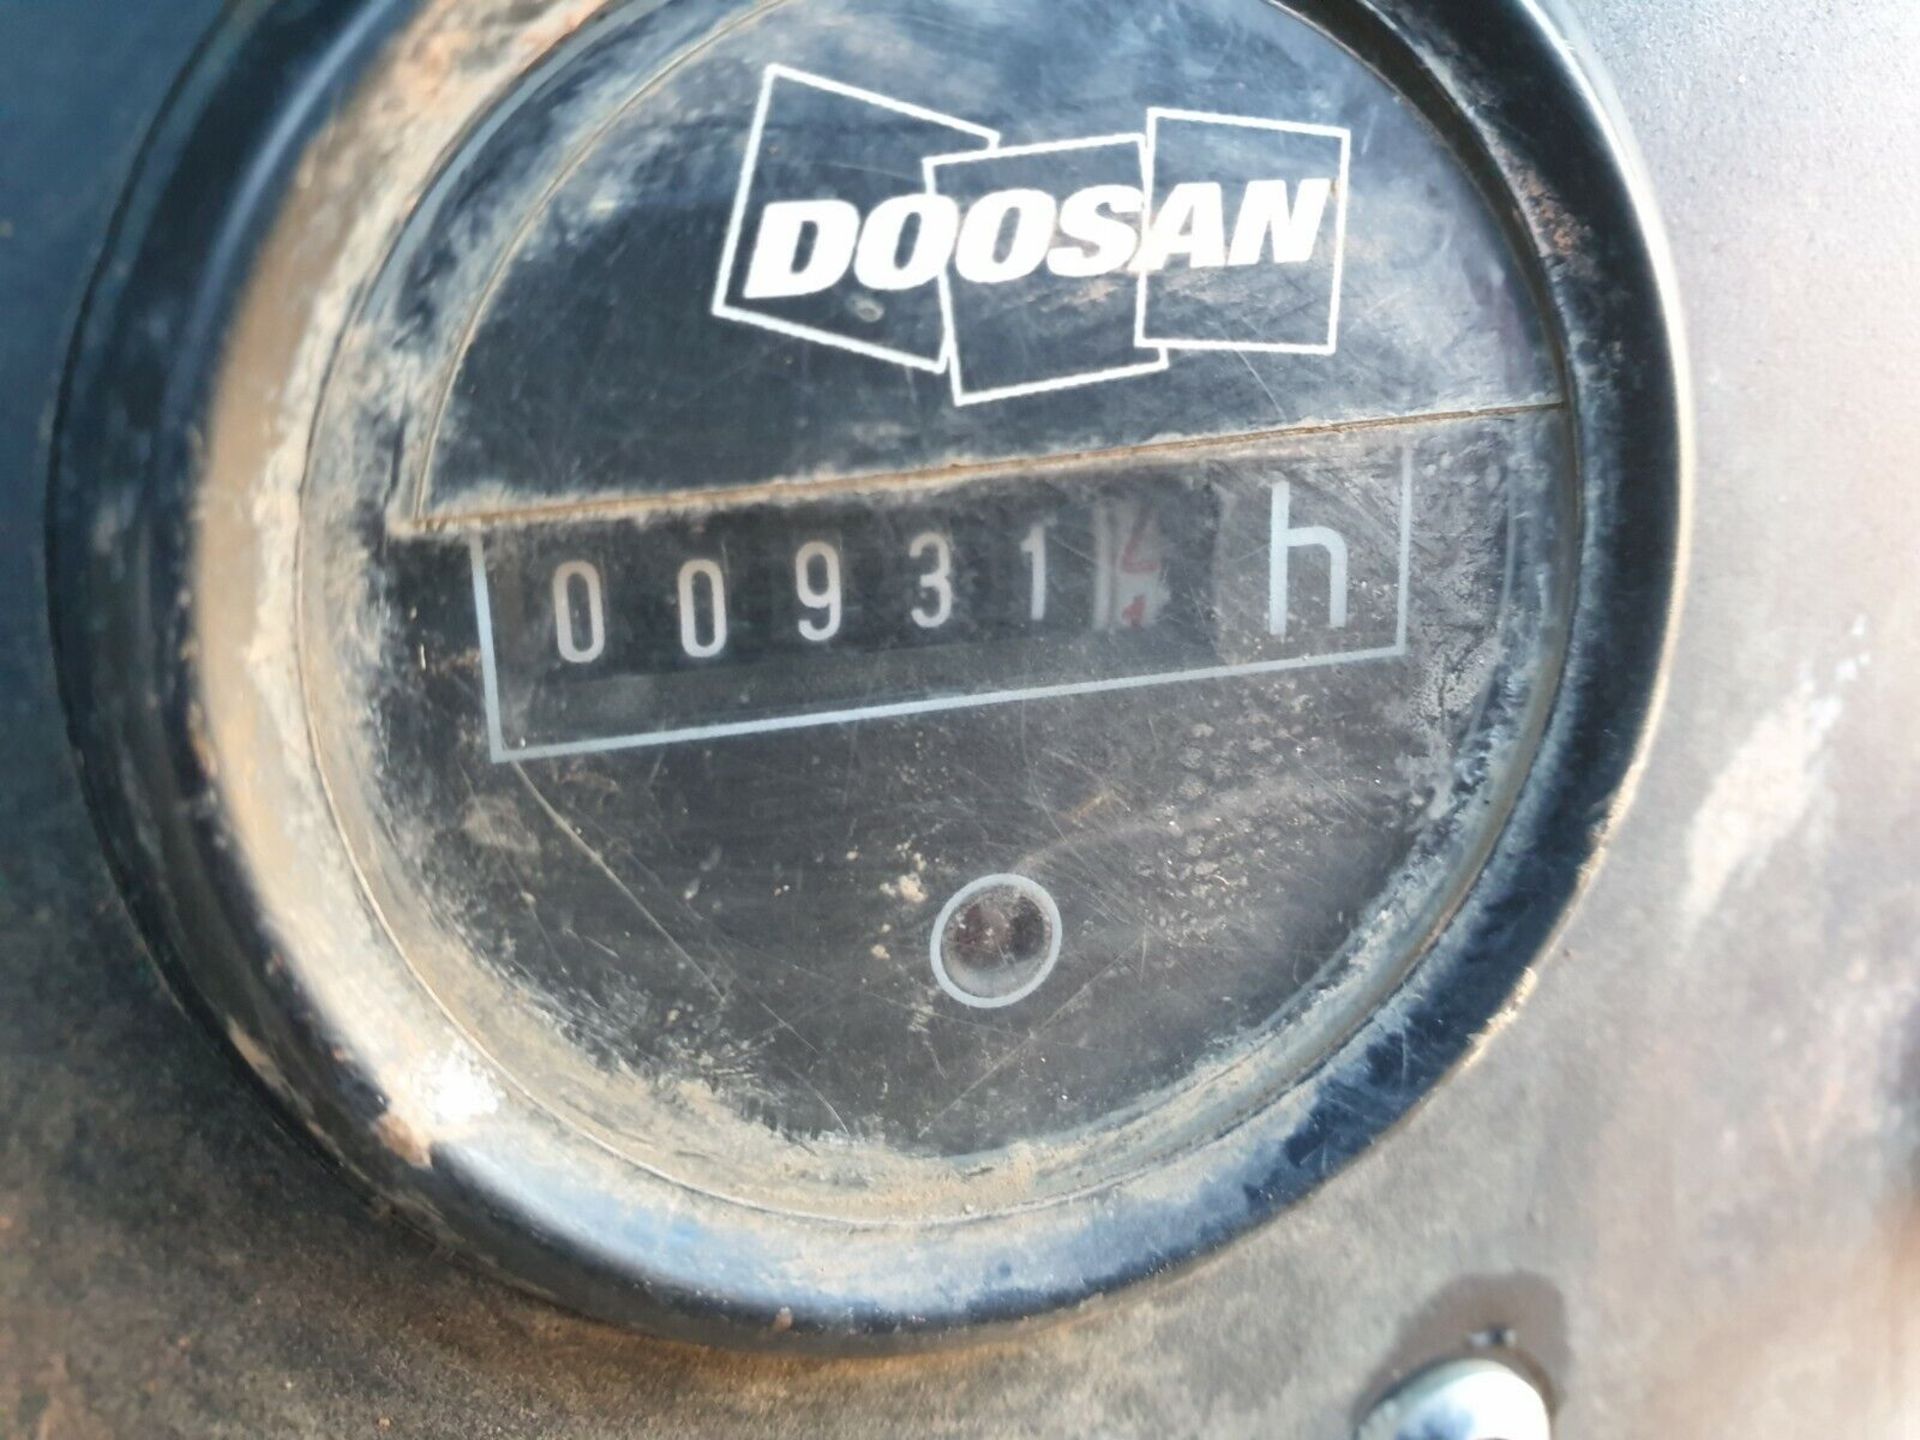 DOOSAN INGERSOLL RAND 7/31E DIESEL PORTABLE AIR COMPRESSOR WITH 110V GENERATOR - Image 7 of 8